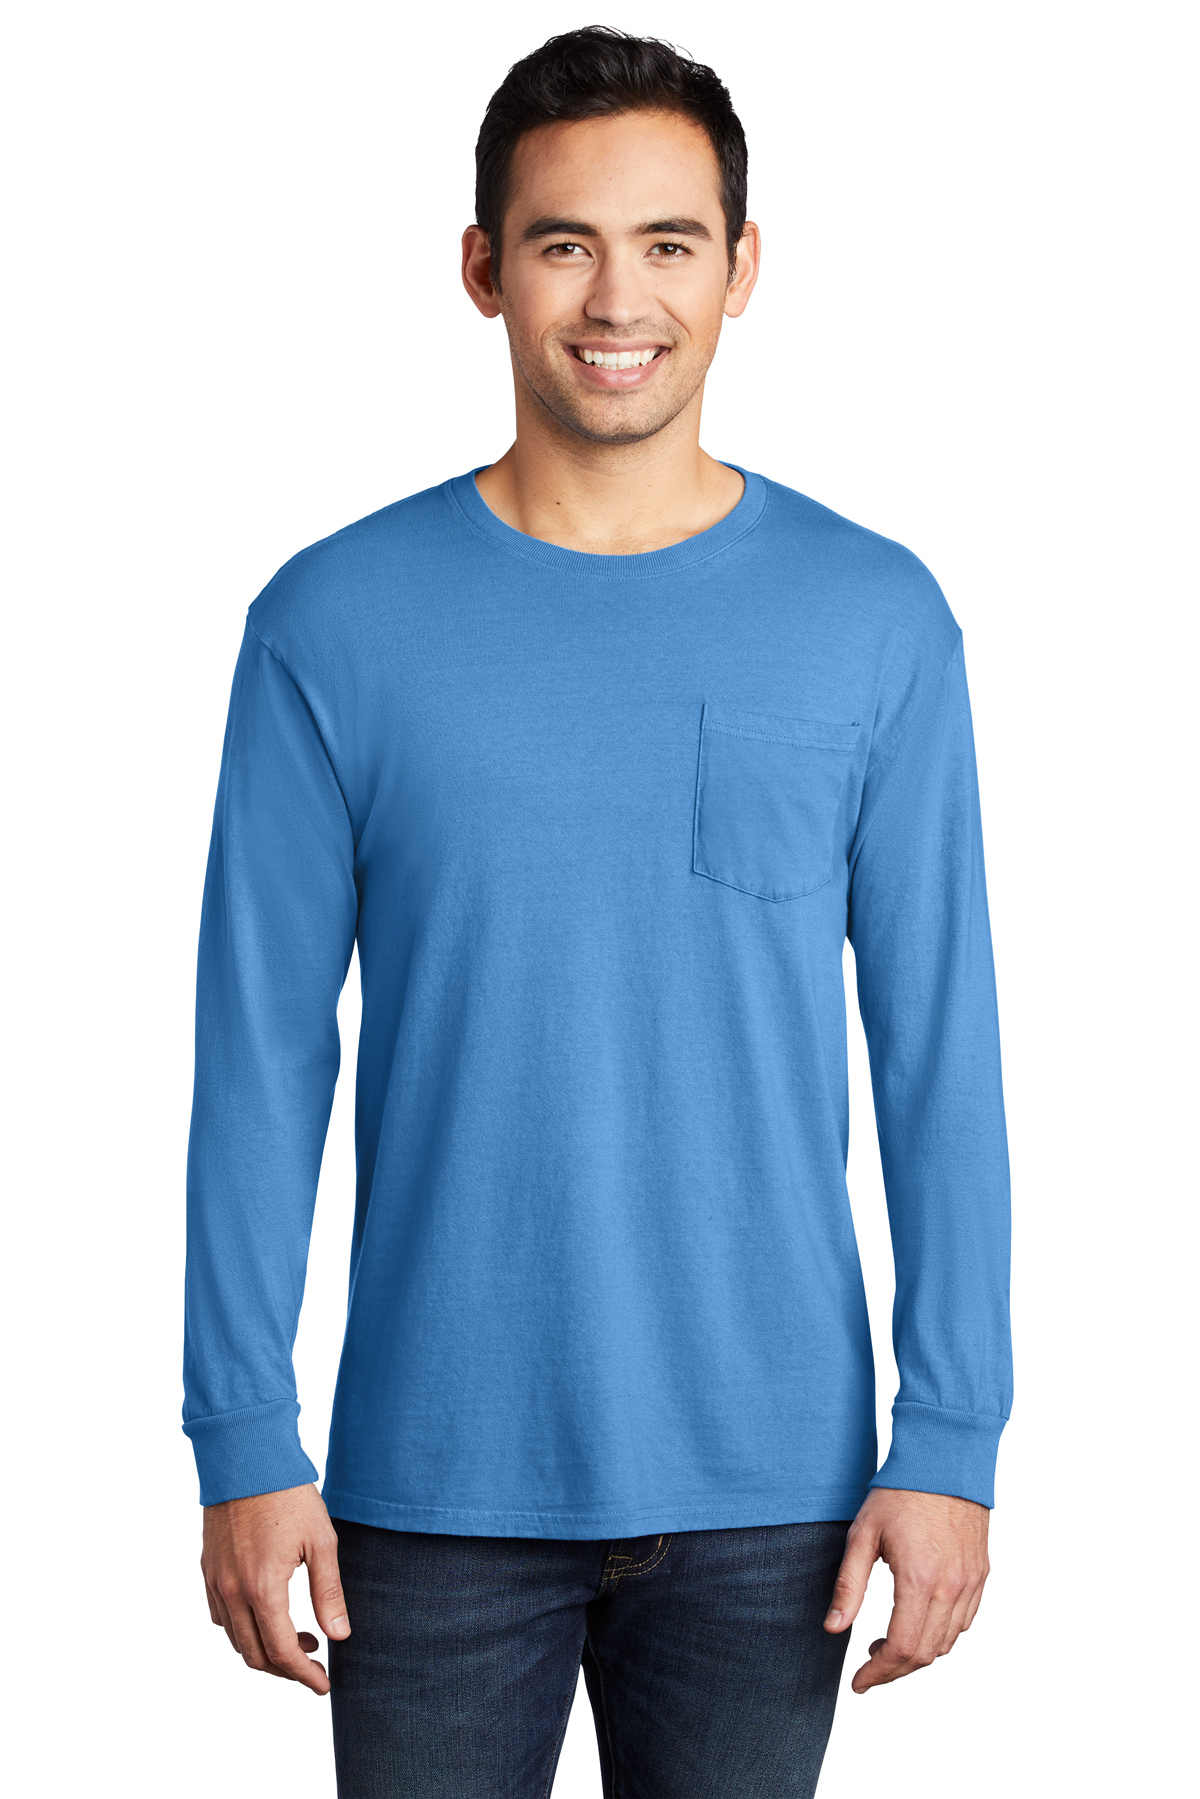 Port & Company Beach Wash Garment-Dyed Long Sleeve Pocket Tee | Product |  Port & Company